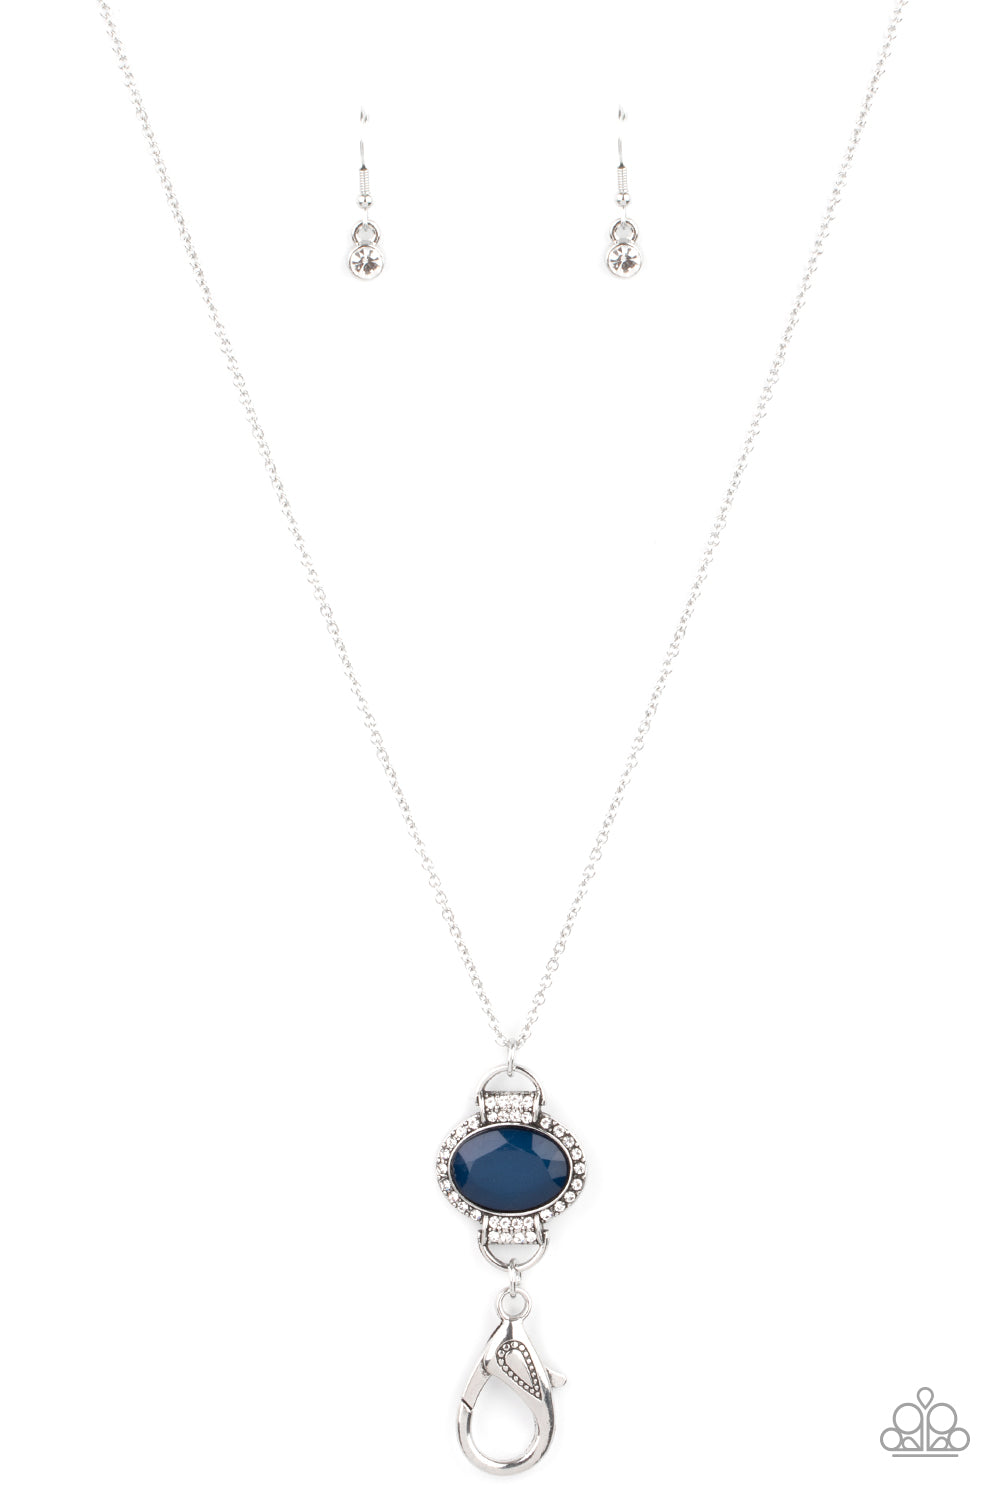 What GLOWS Up - blue - Paparazzi LANYARD necklace